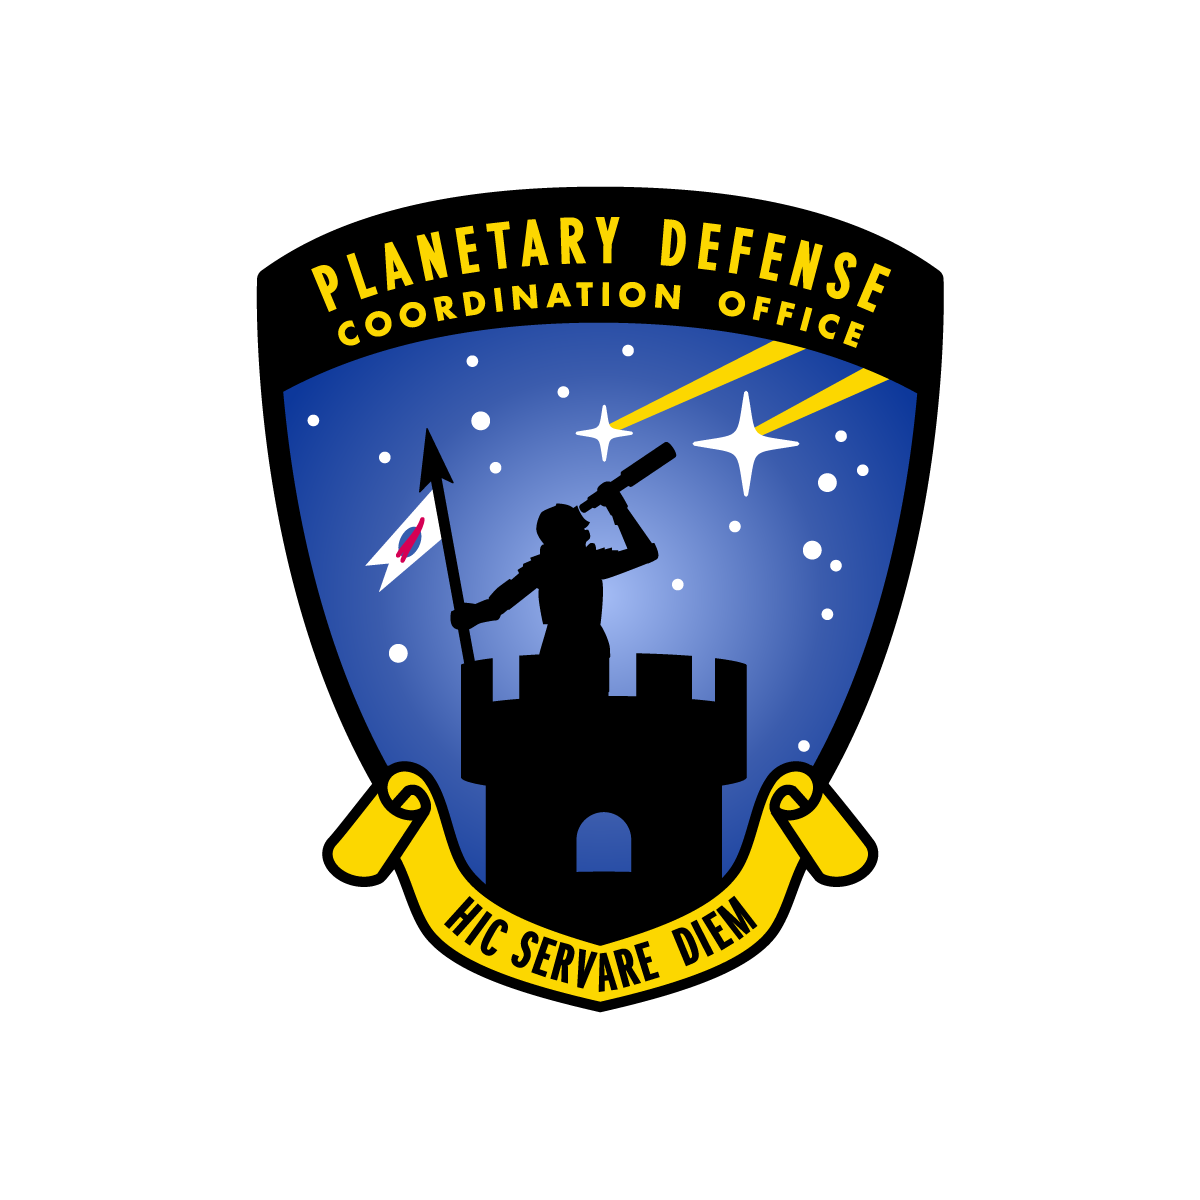 Planetary Defense Coordination Office shield